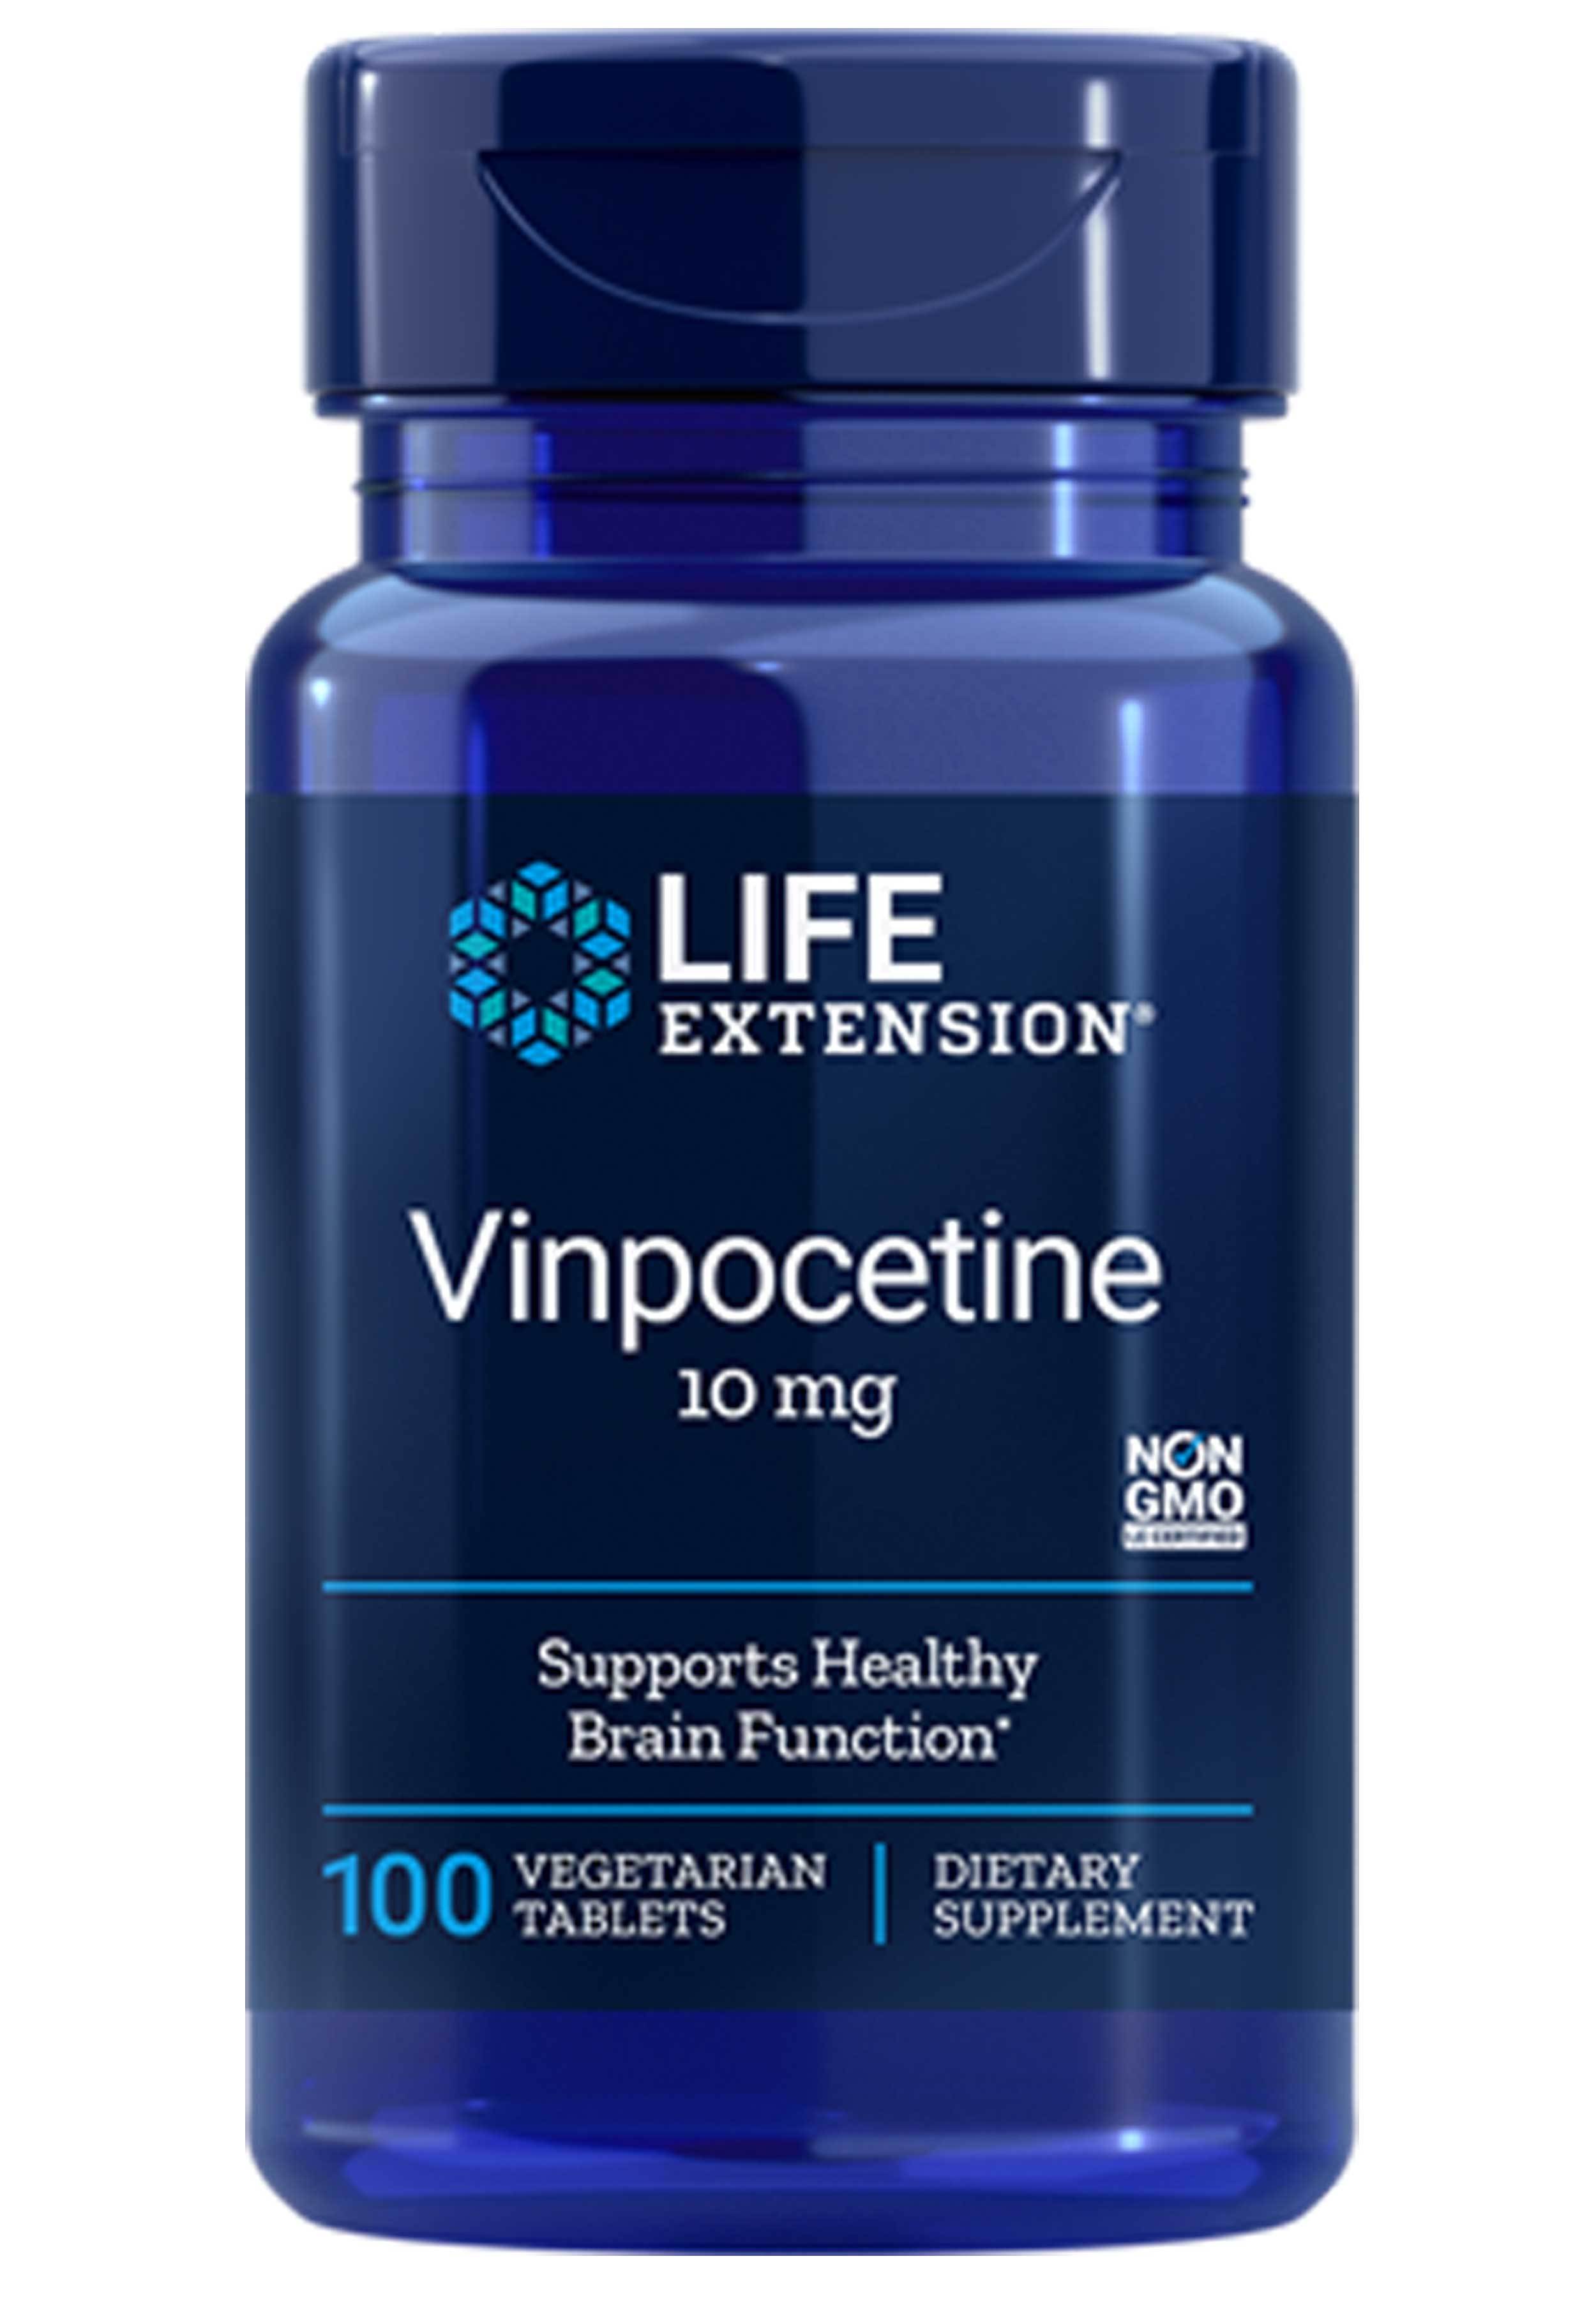 Life Extension Vinpocetine